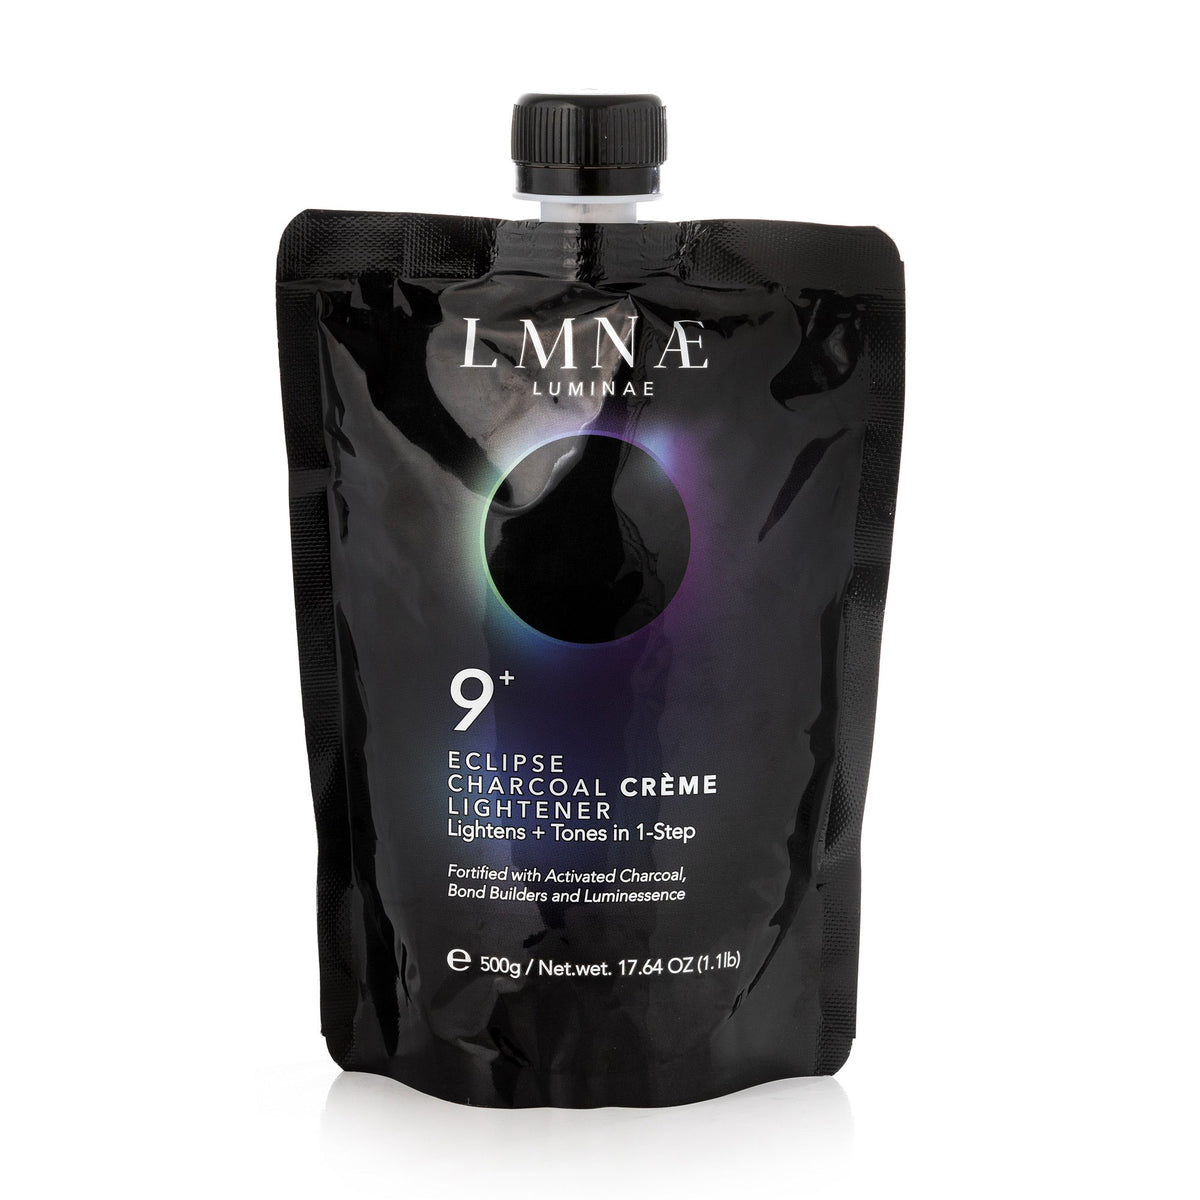 9+ Eclipse Charcoal Creme Lightener | Launch Kit | LUMINAE - luminaehaircare